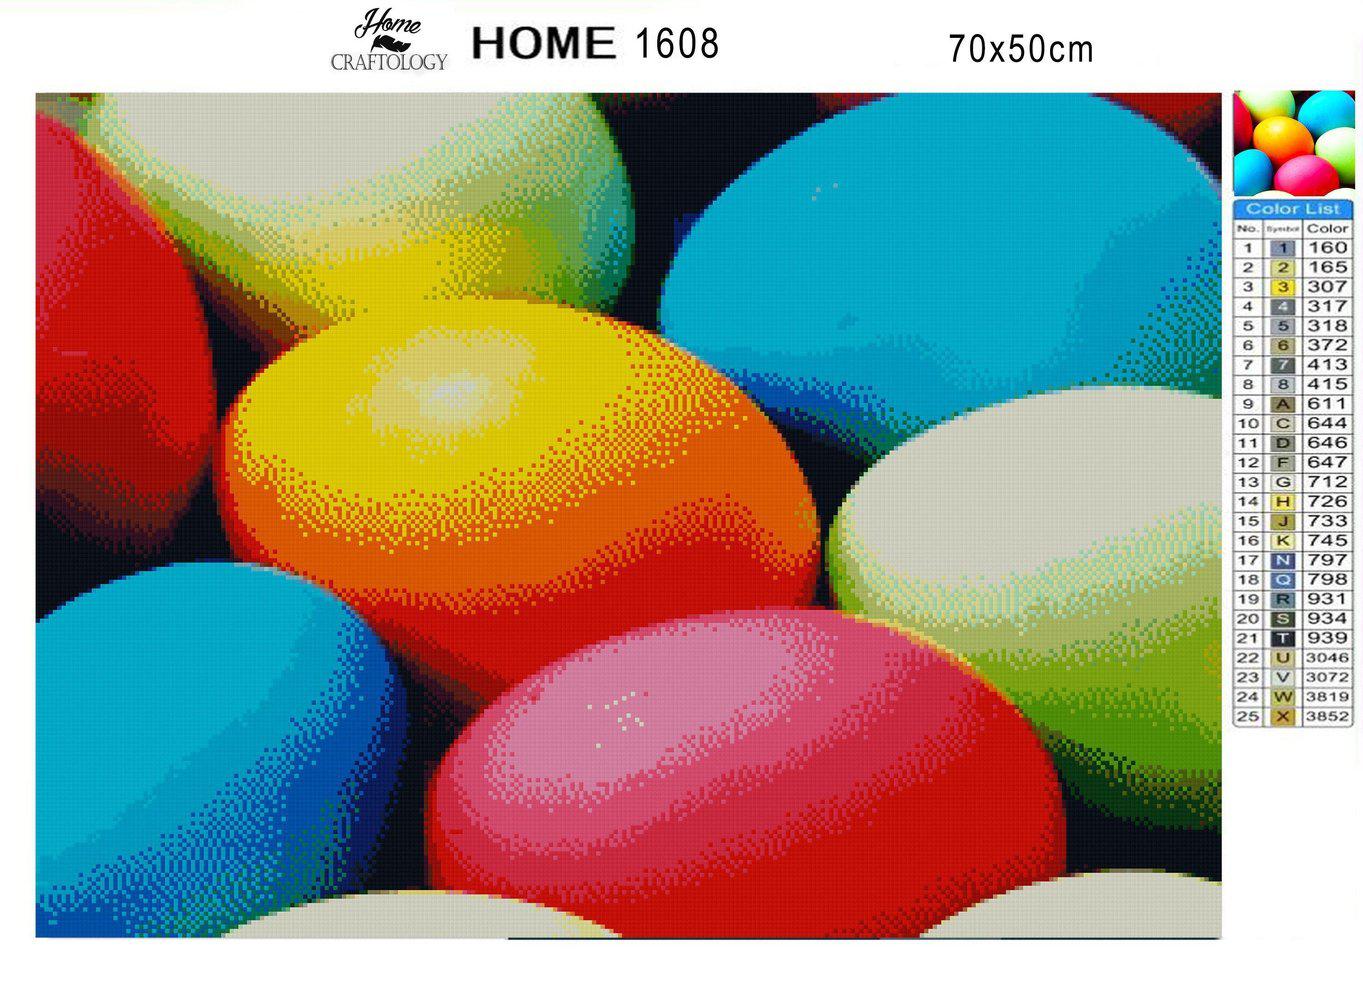 Plain Colorful Eggs - Premium Diamond Painting Kit